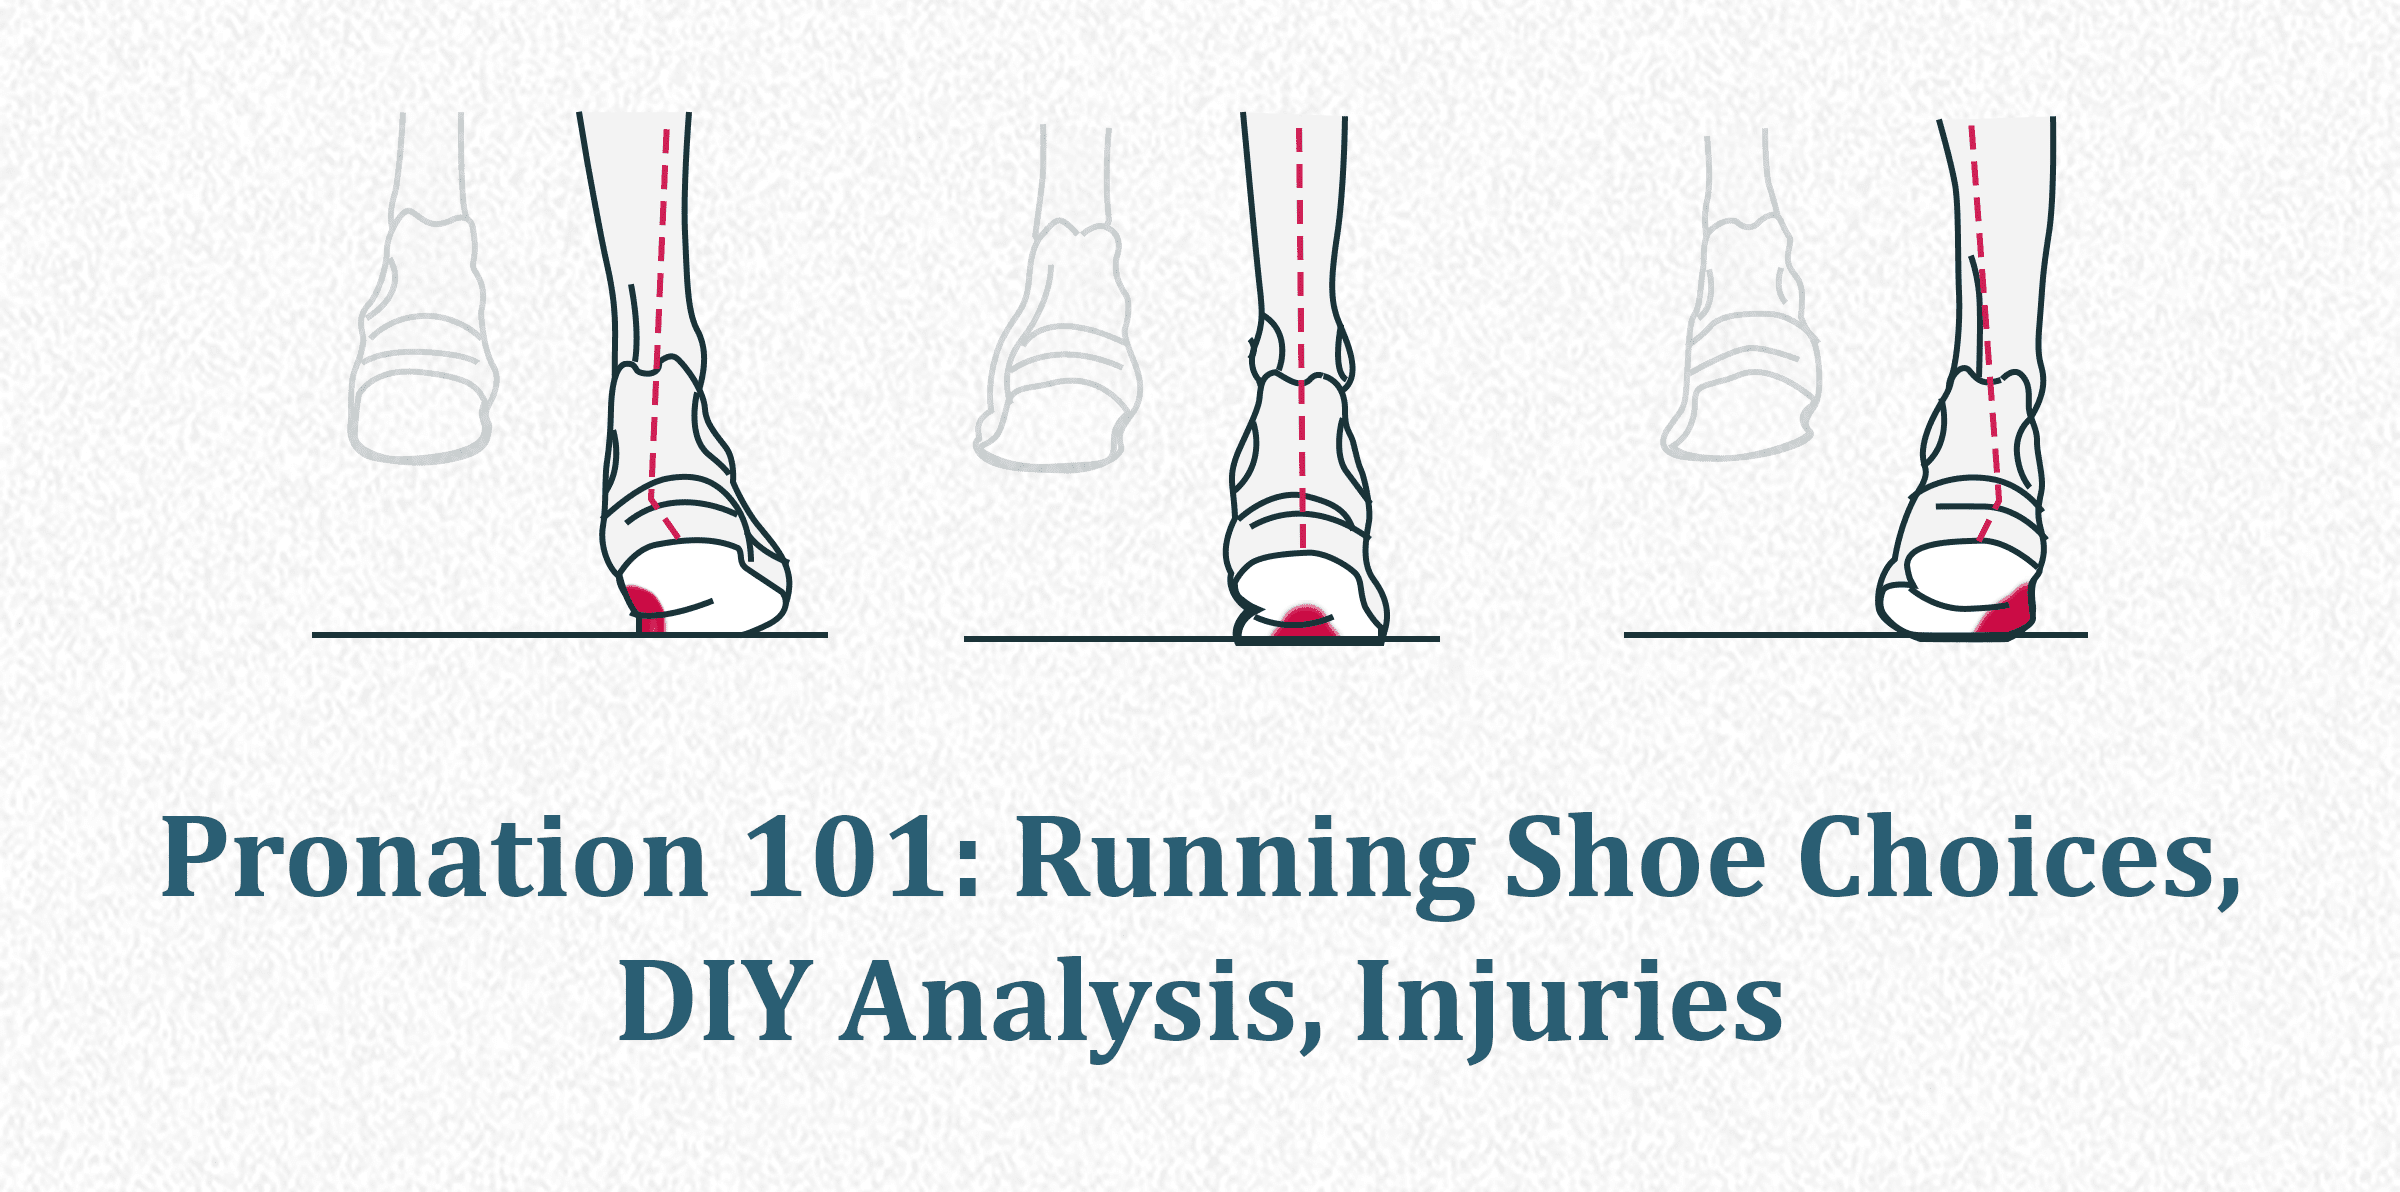 Pronation 101: Running Shoe Choices 